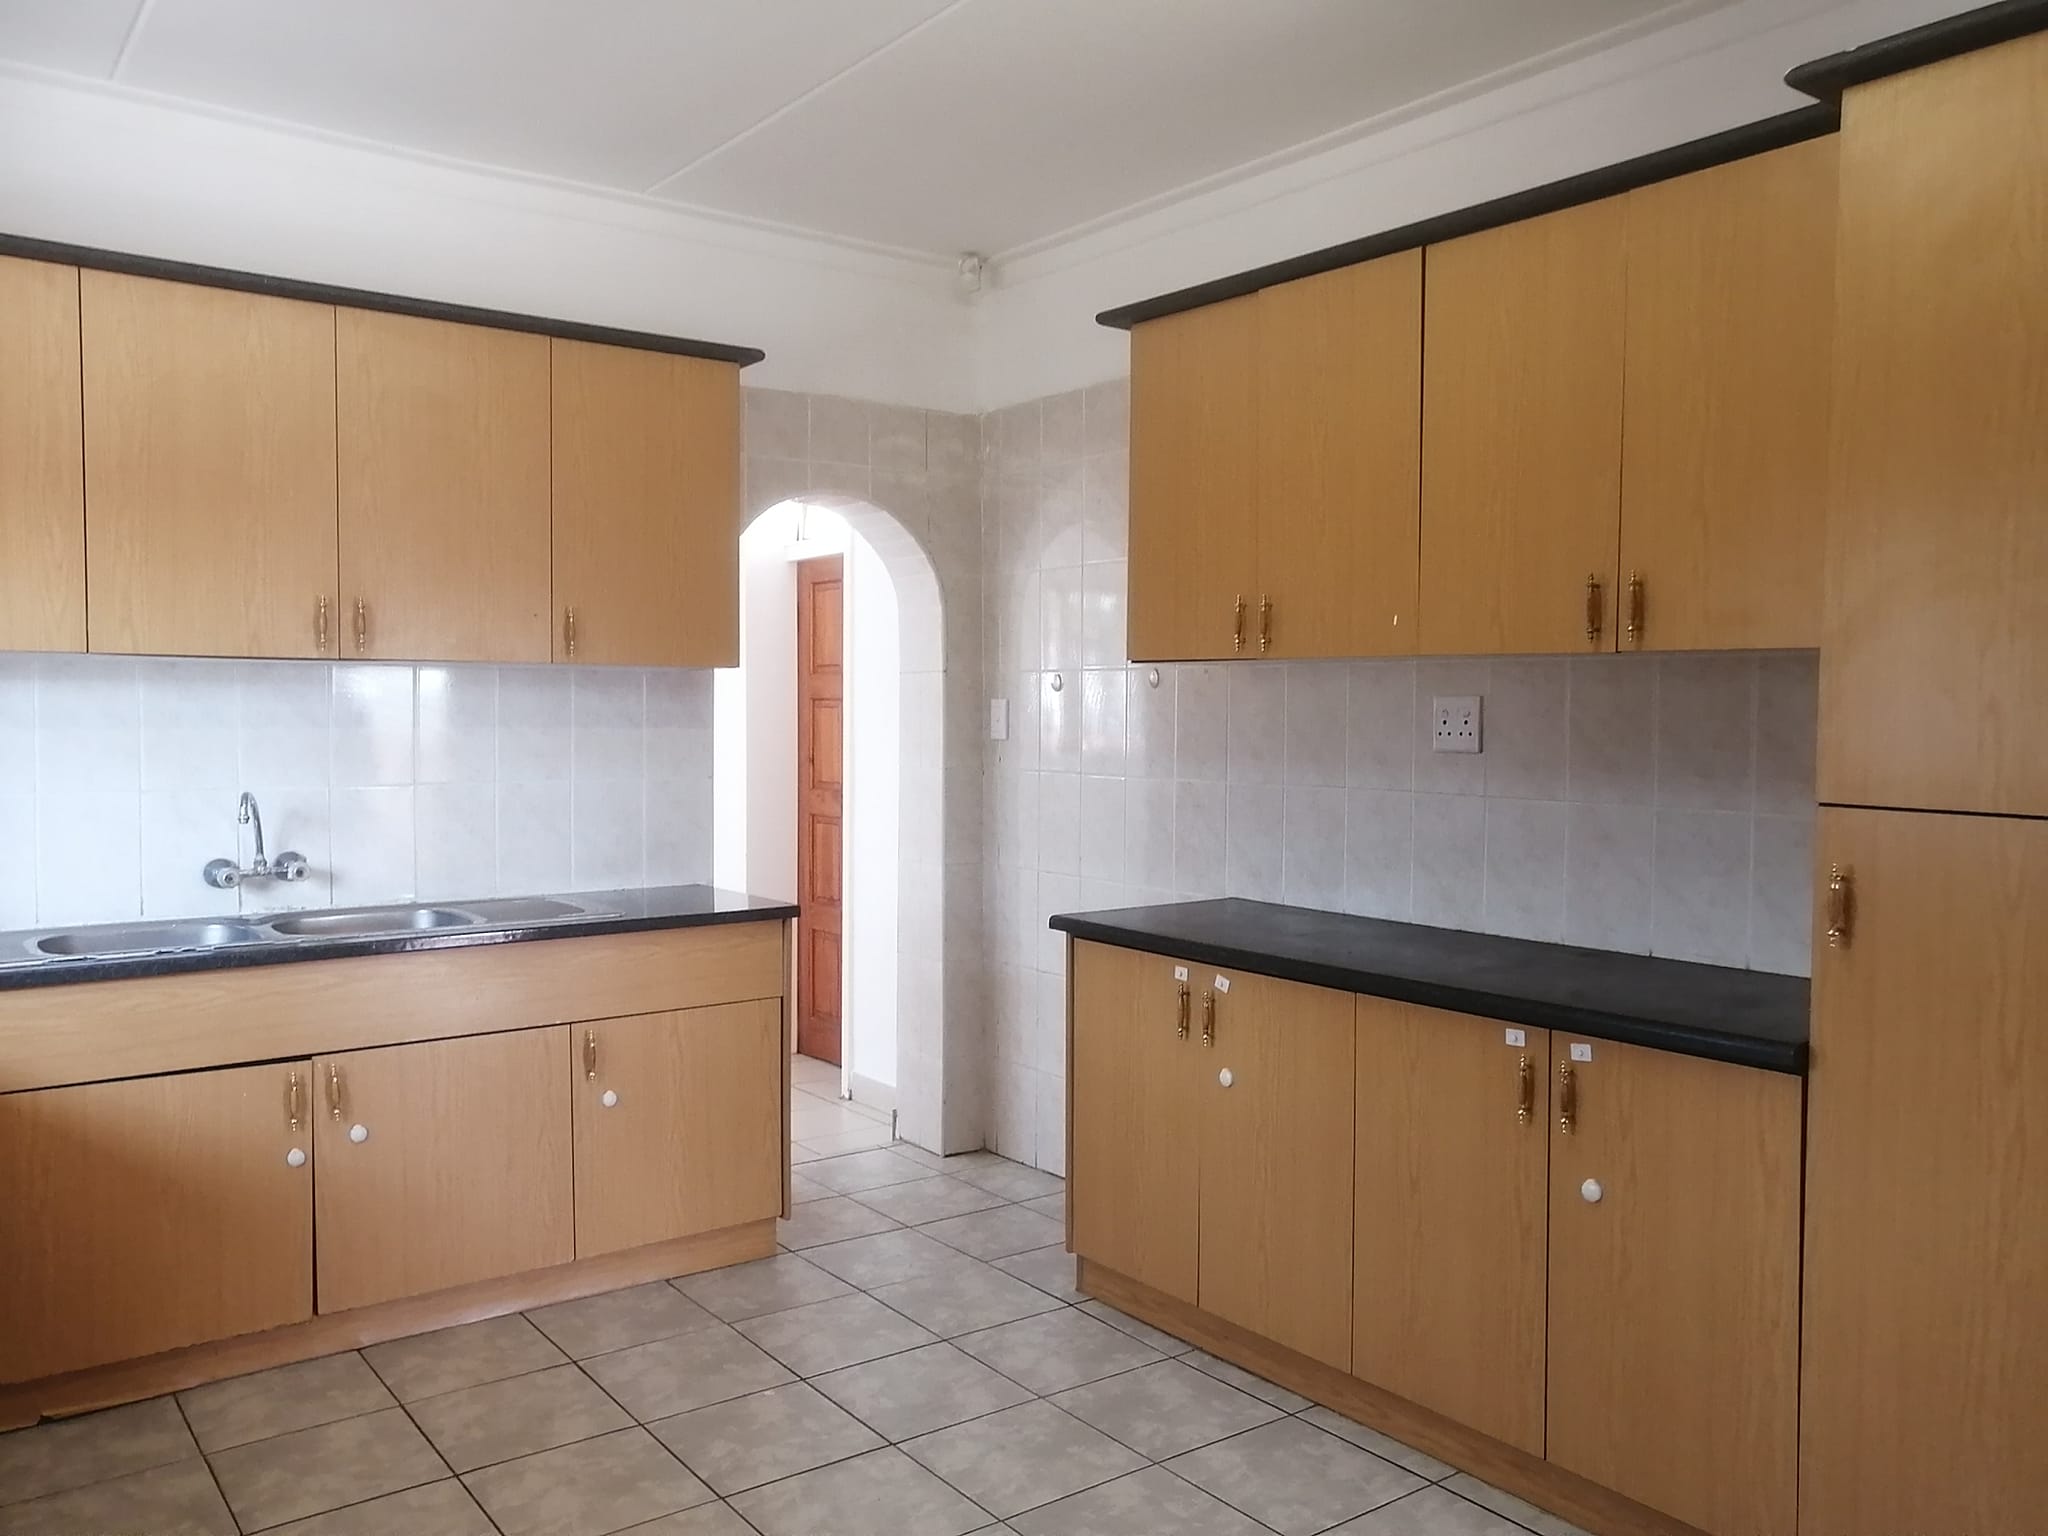 House for Sale in Windhoek – Renovators Dream